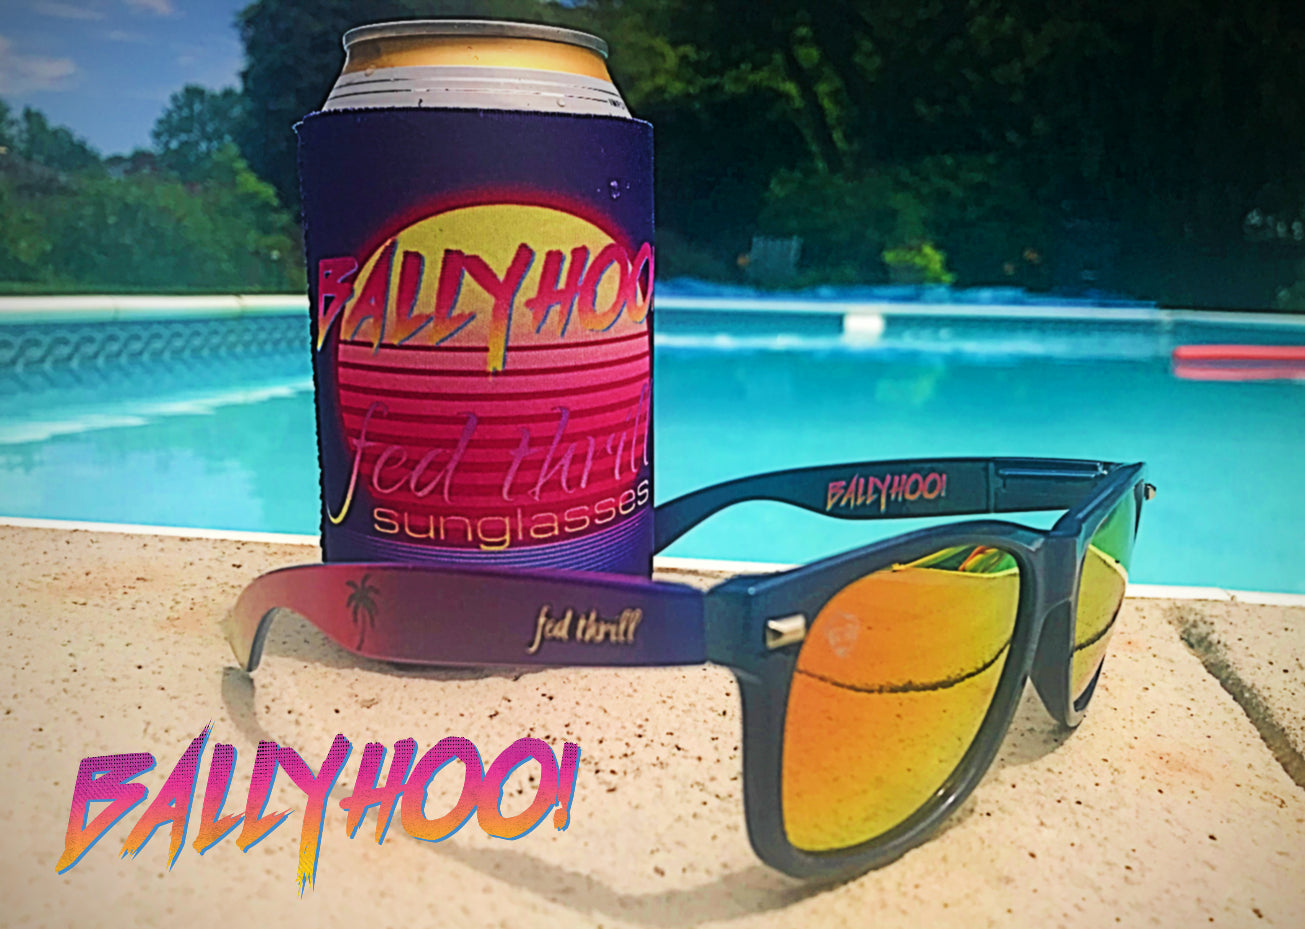 Fultons -  Ballyhoo! 2.0 Limited Edition Sunglasses